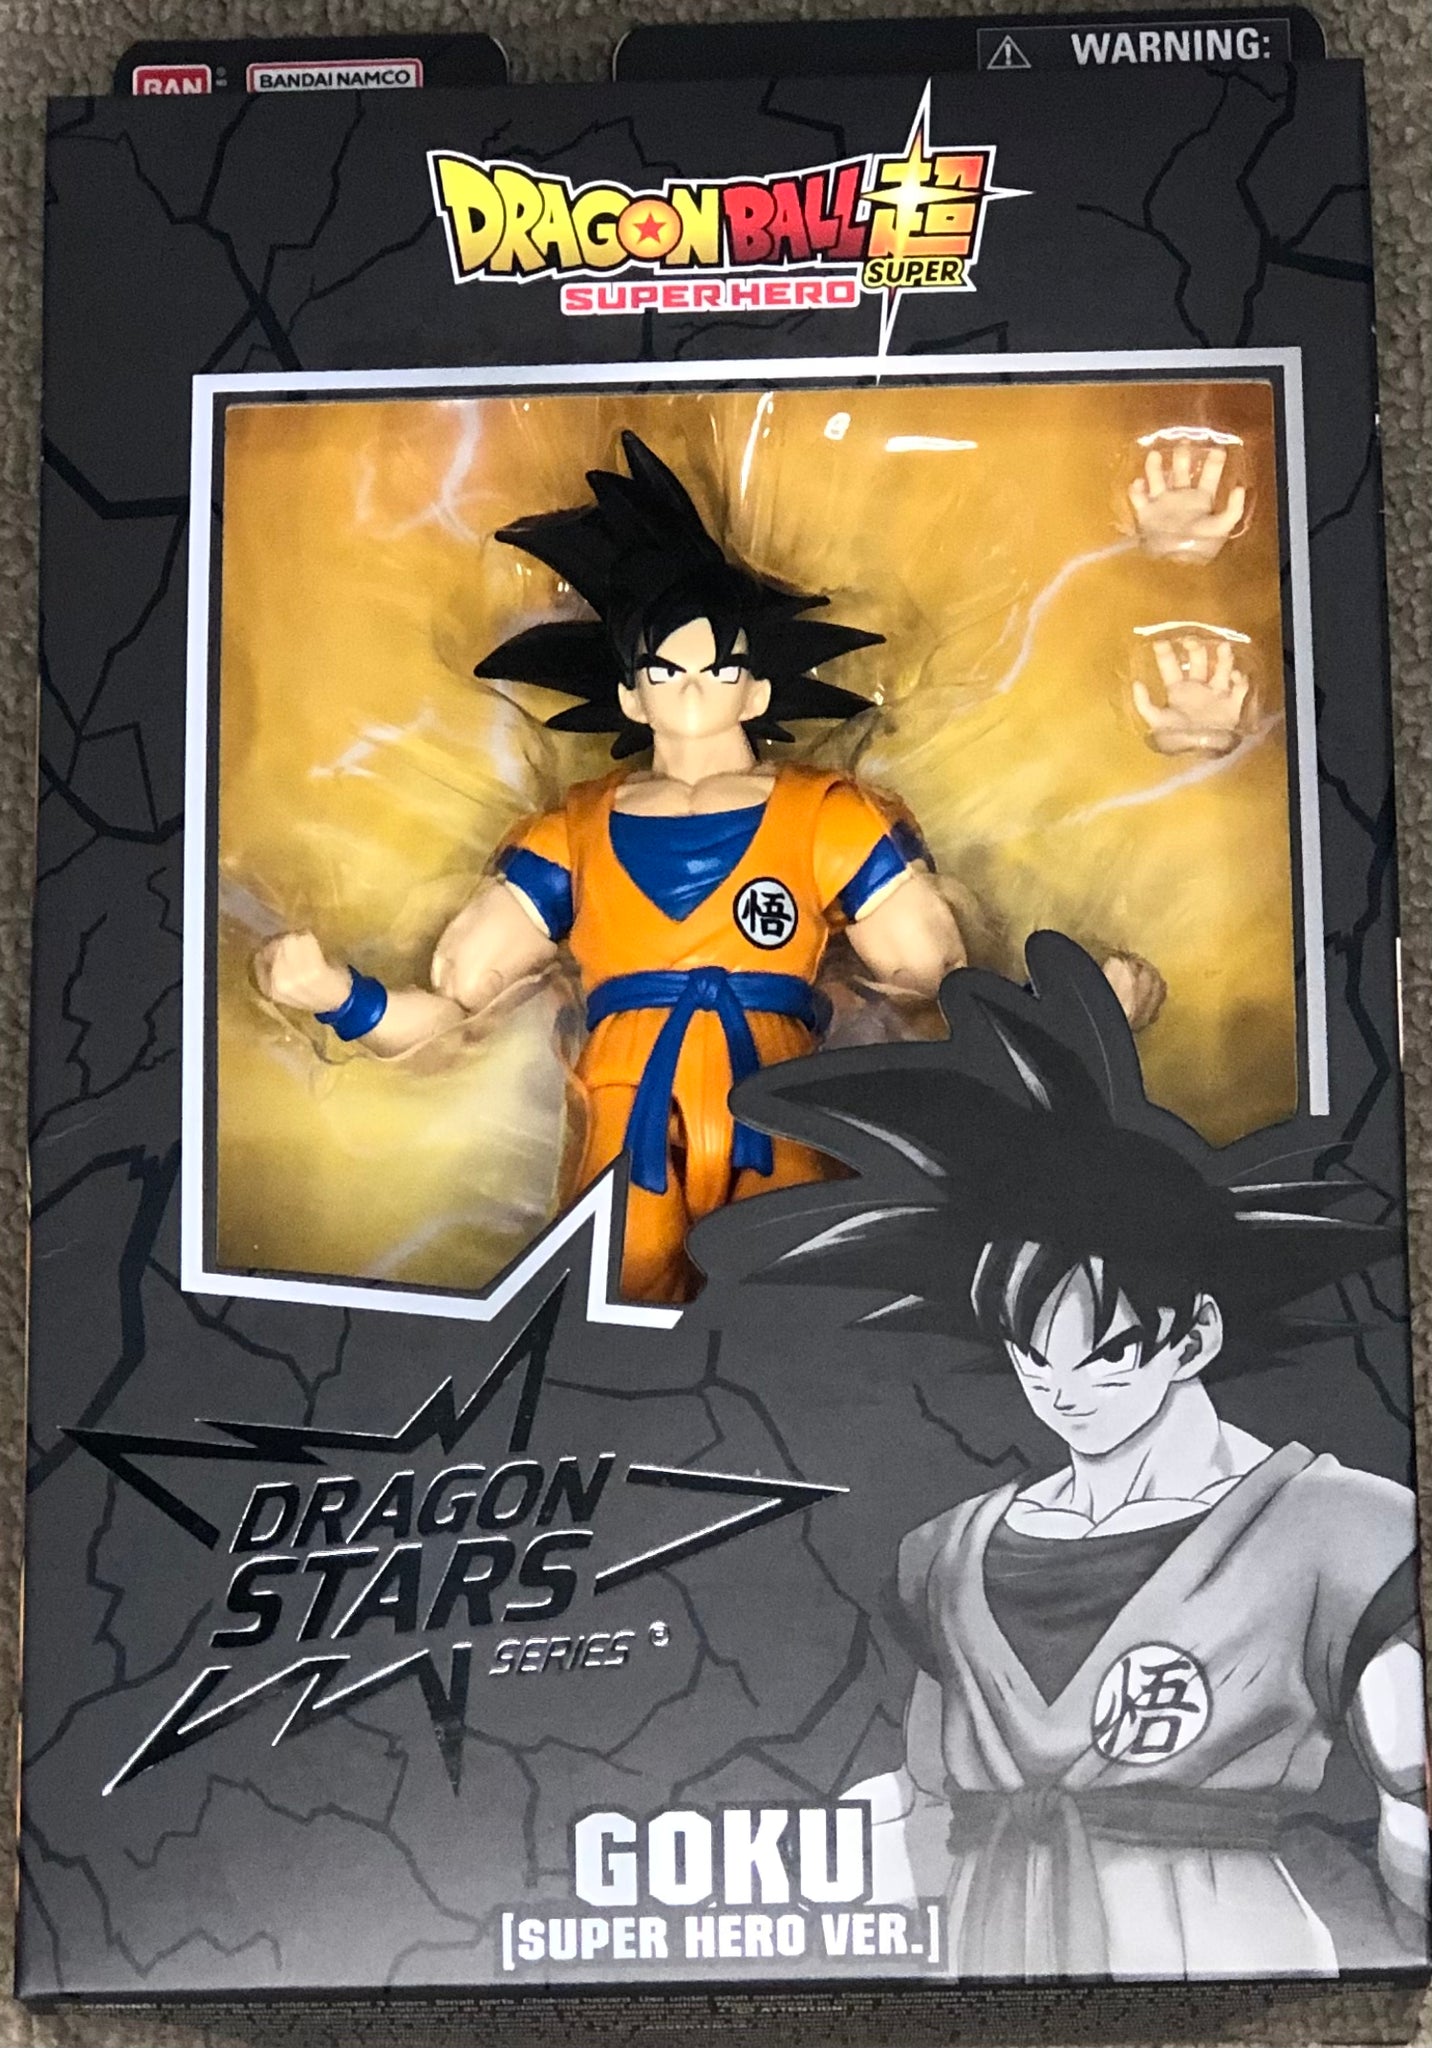 Dragon Stars Series - Ultra Instinct Goku Action Figure – Toyz Anime